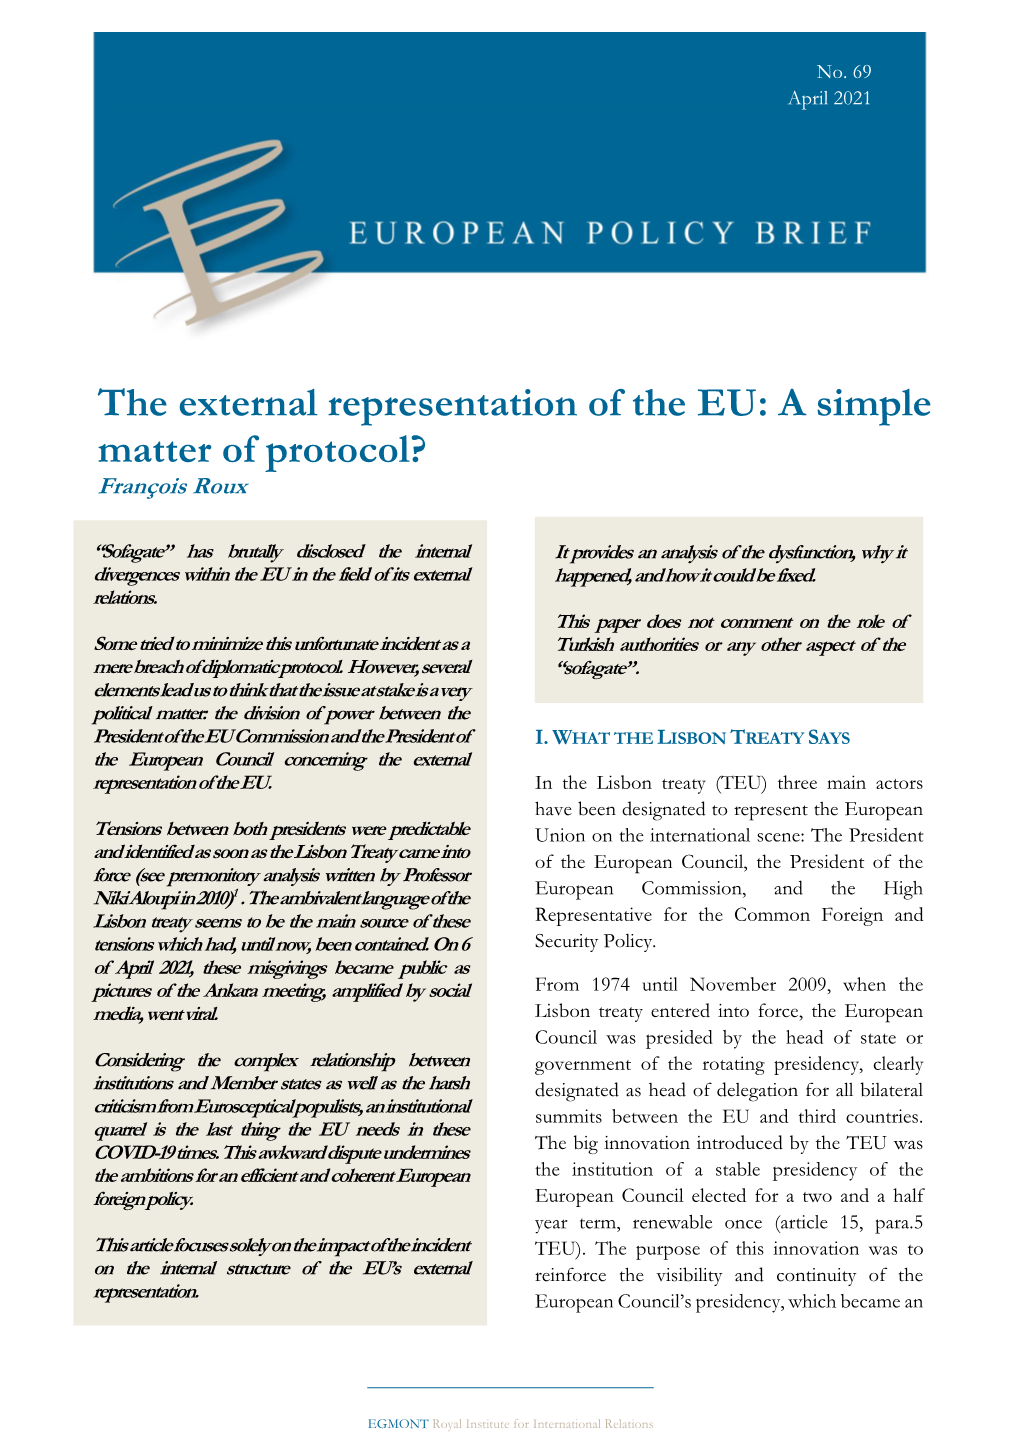 The External Representation of the EU: a Simple Matter of Protocol? François Roux